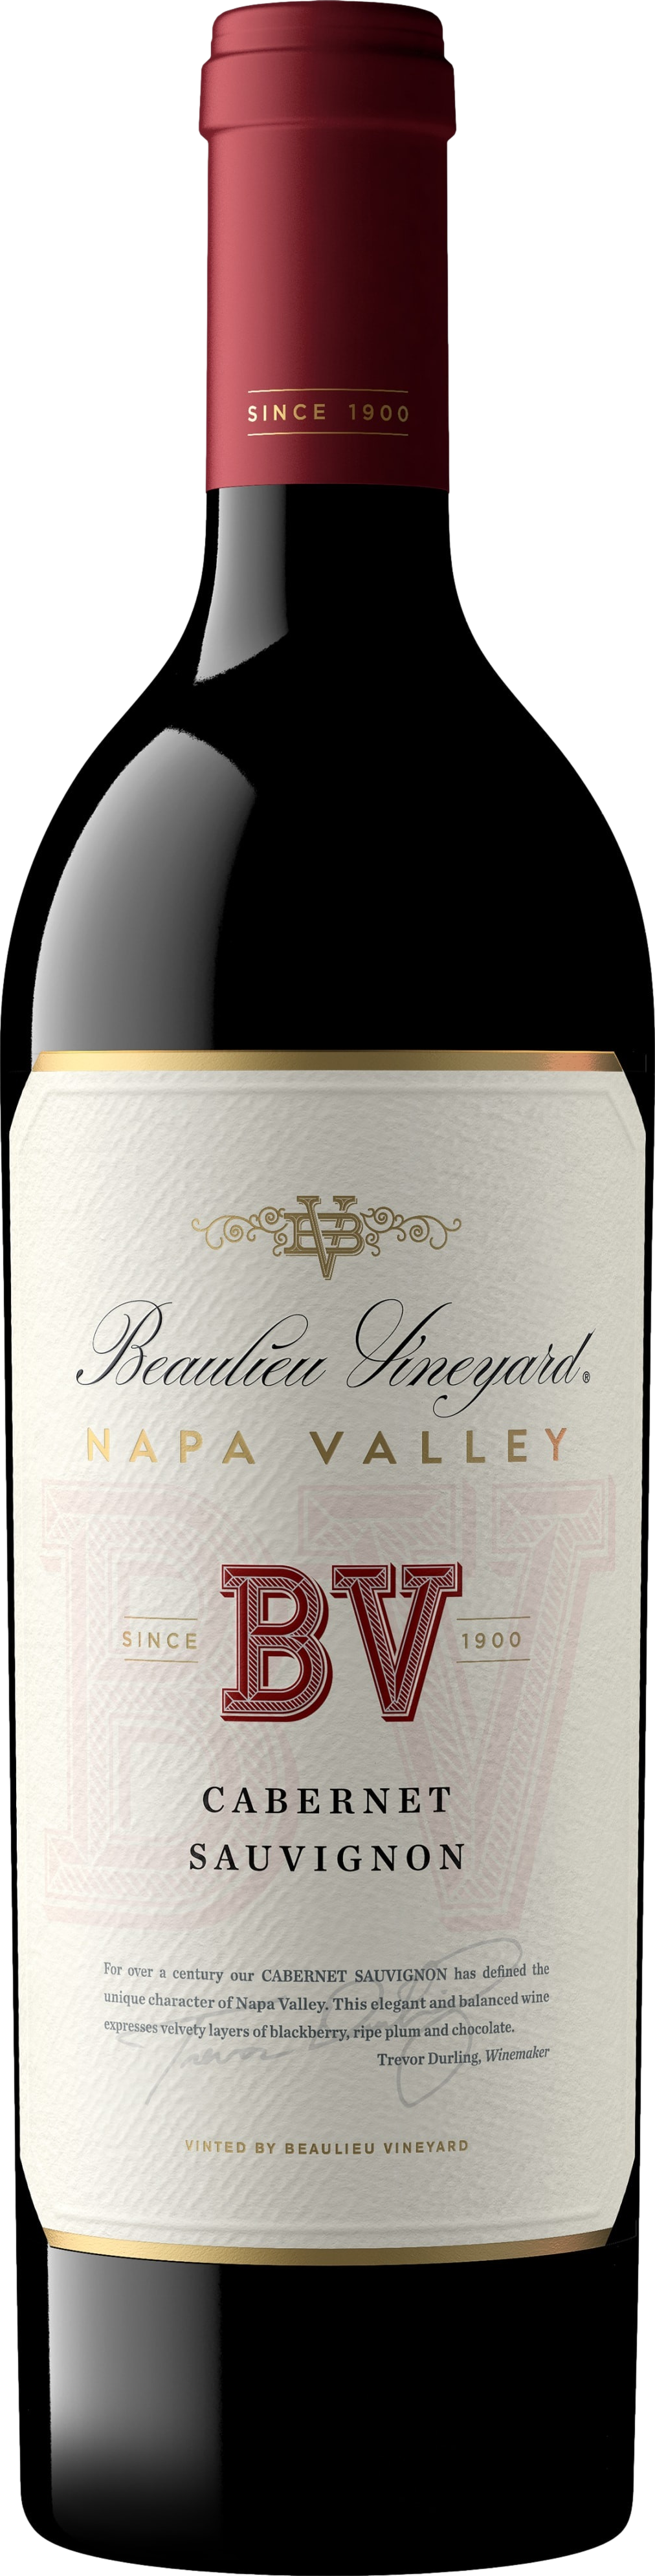 2018/J4 günstig Kaufen-Beaulieu Vineyard Napa Valley Cabernet Sauvignon 2018. Beaulieu Vineyard Napa Valley Cabernet Sauvignon 2018 . 